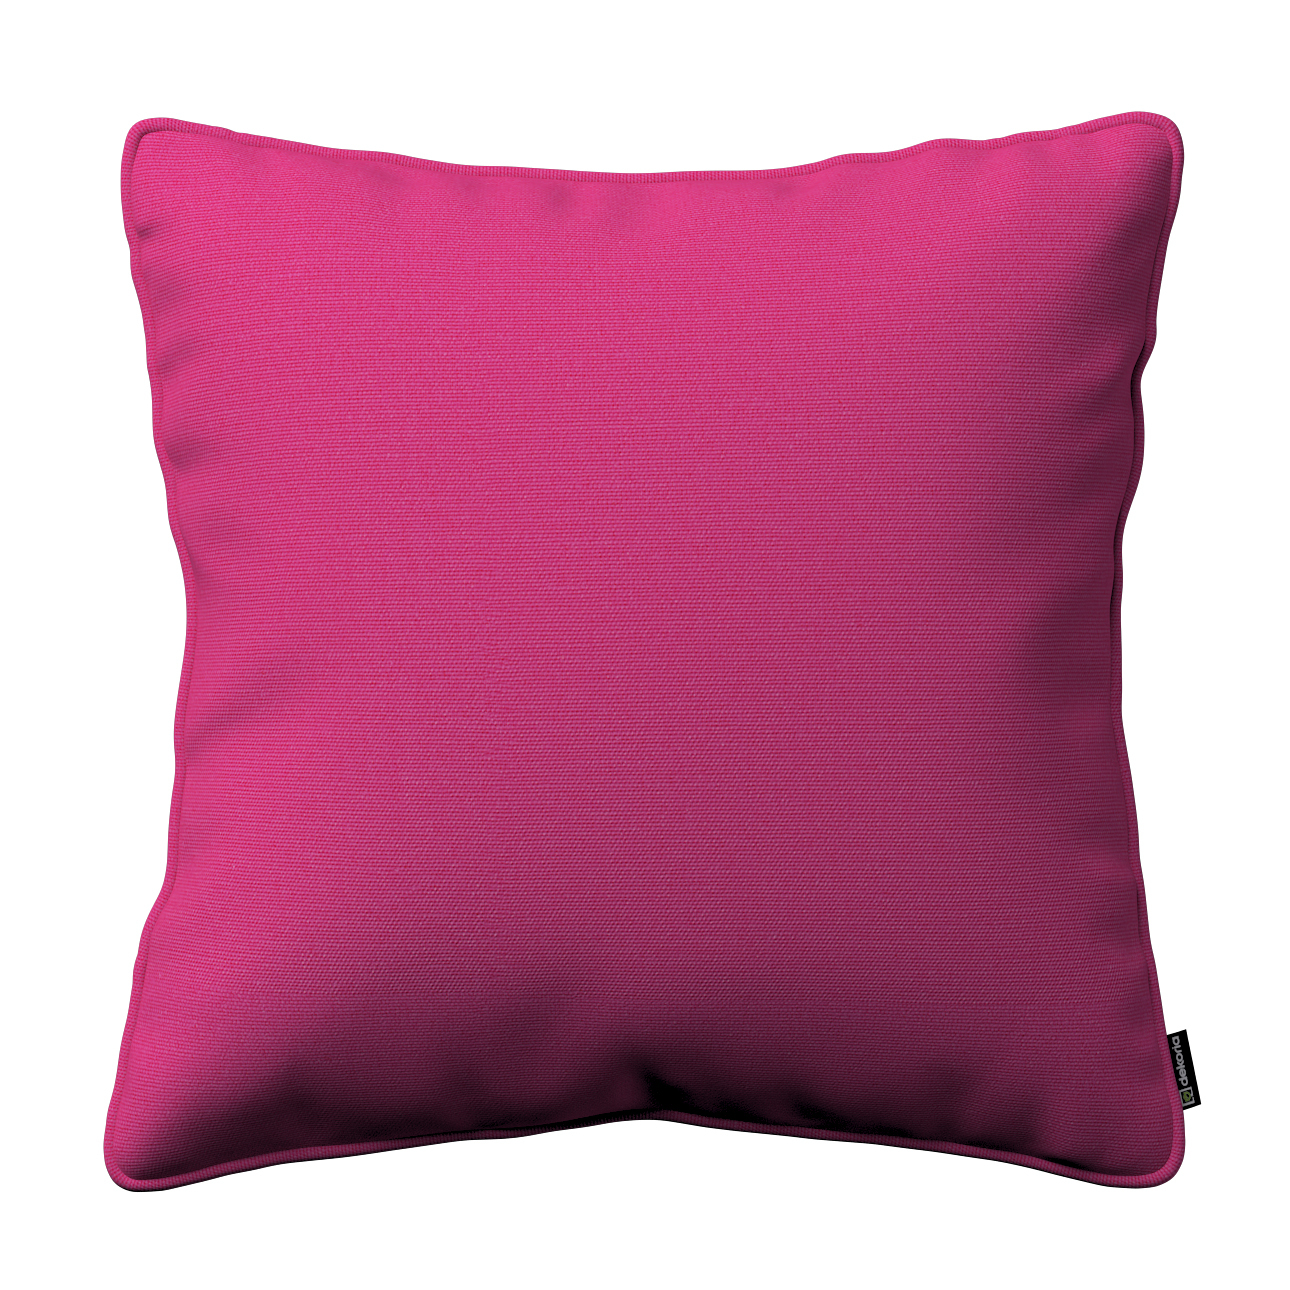 Kissenhülle Gabi mit Paspel, rosa, 45 x 45 cm, Loneta (133-60) günstig online kaufen